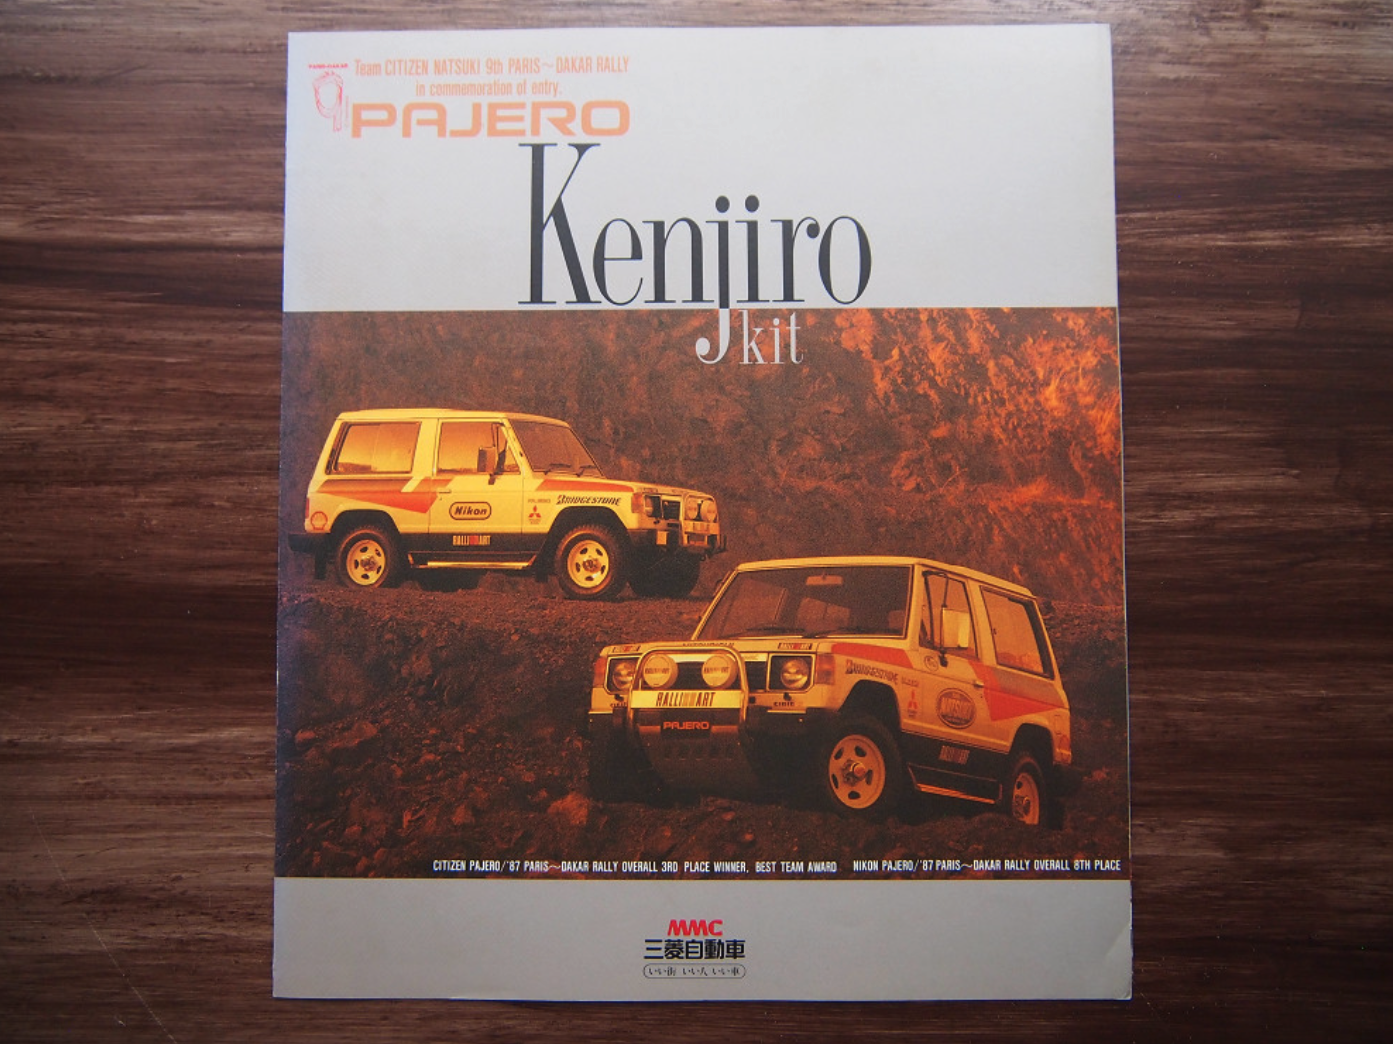 The 1988 Paris Dakar Edition Pajero brochure